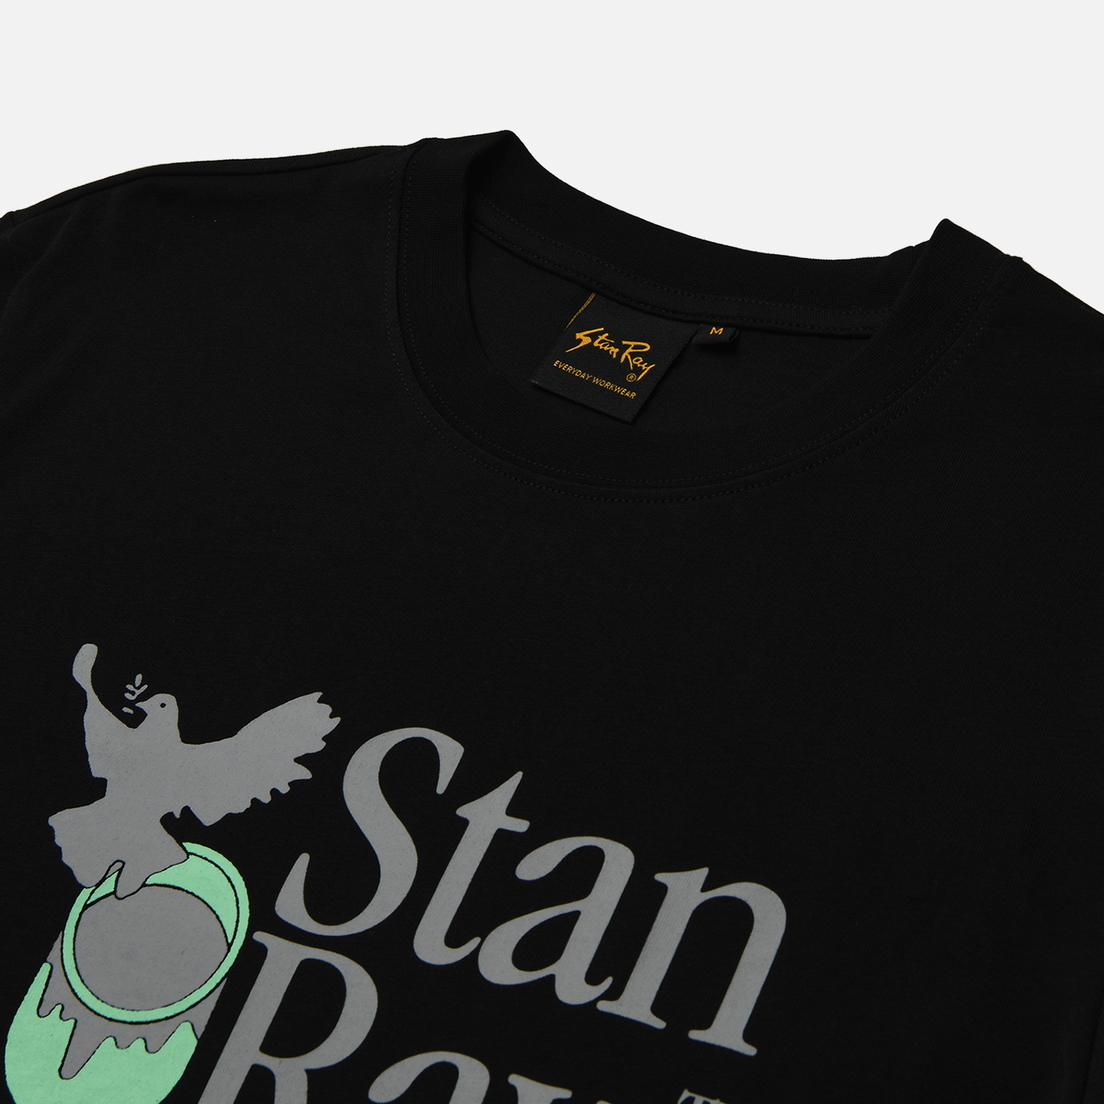 Stan Ray Мужская футболка Peace Of Mind